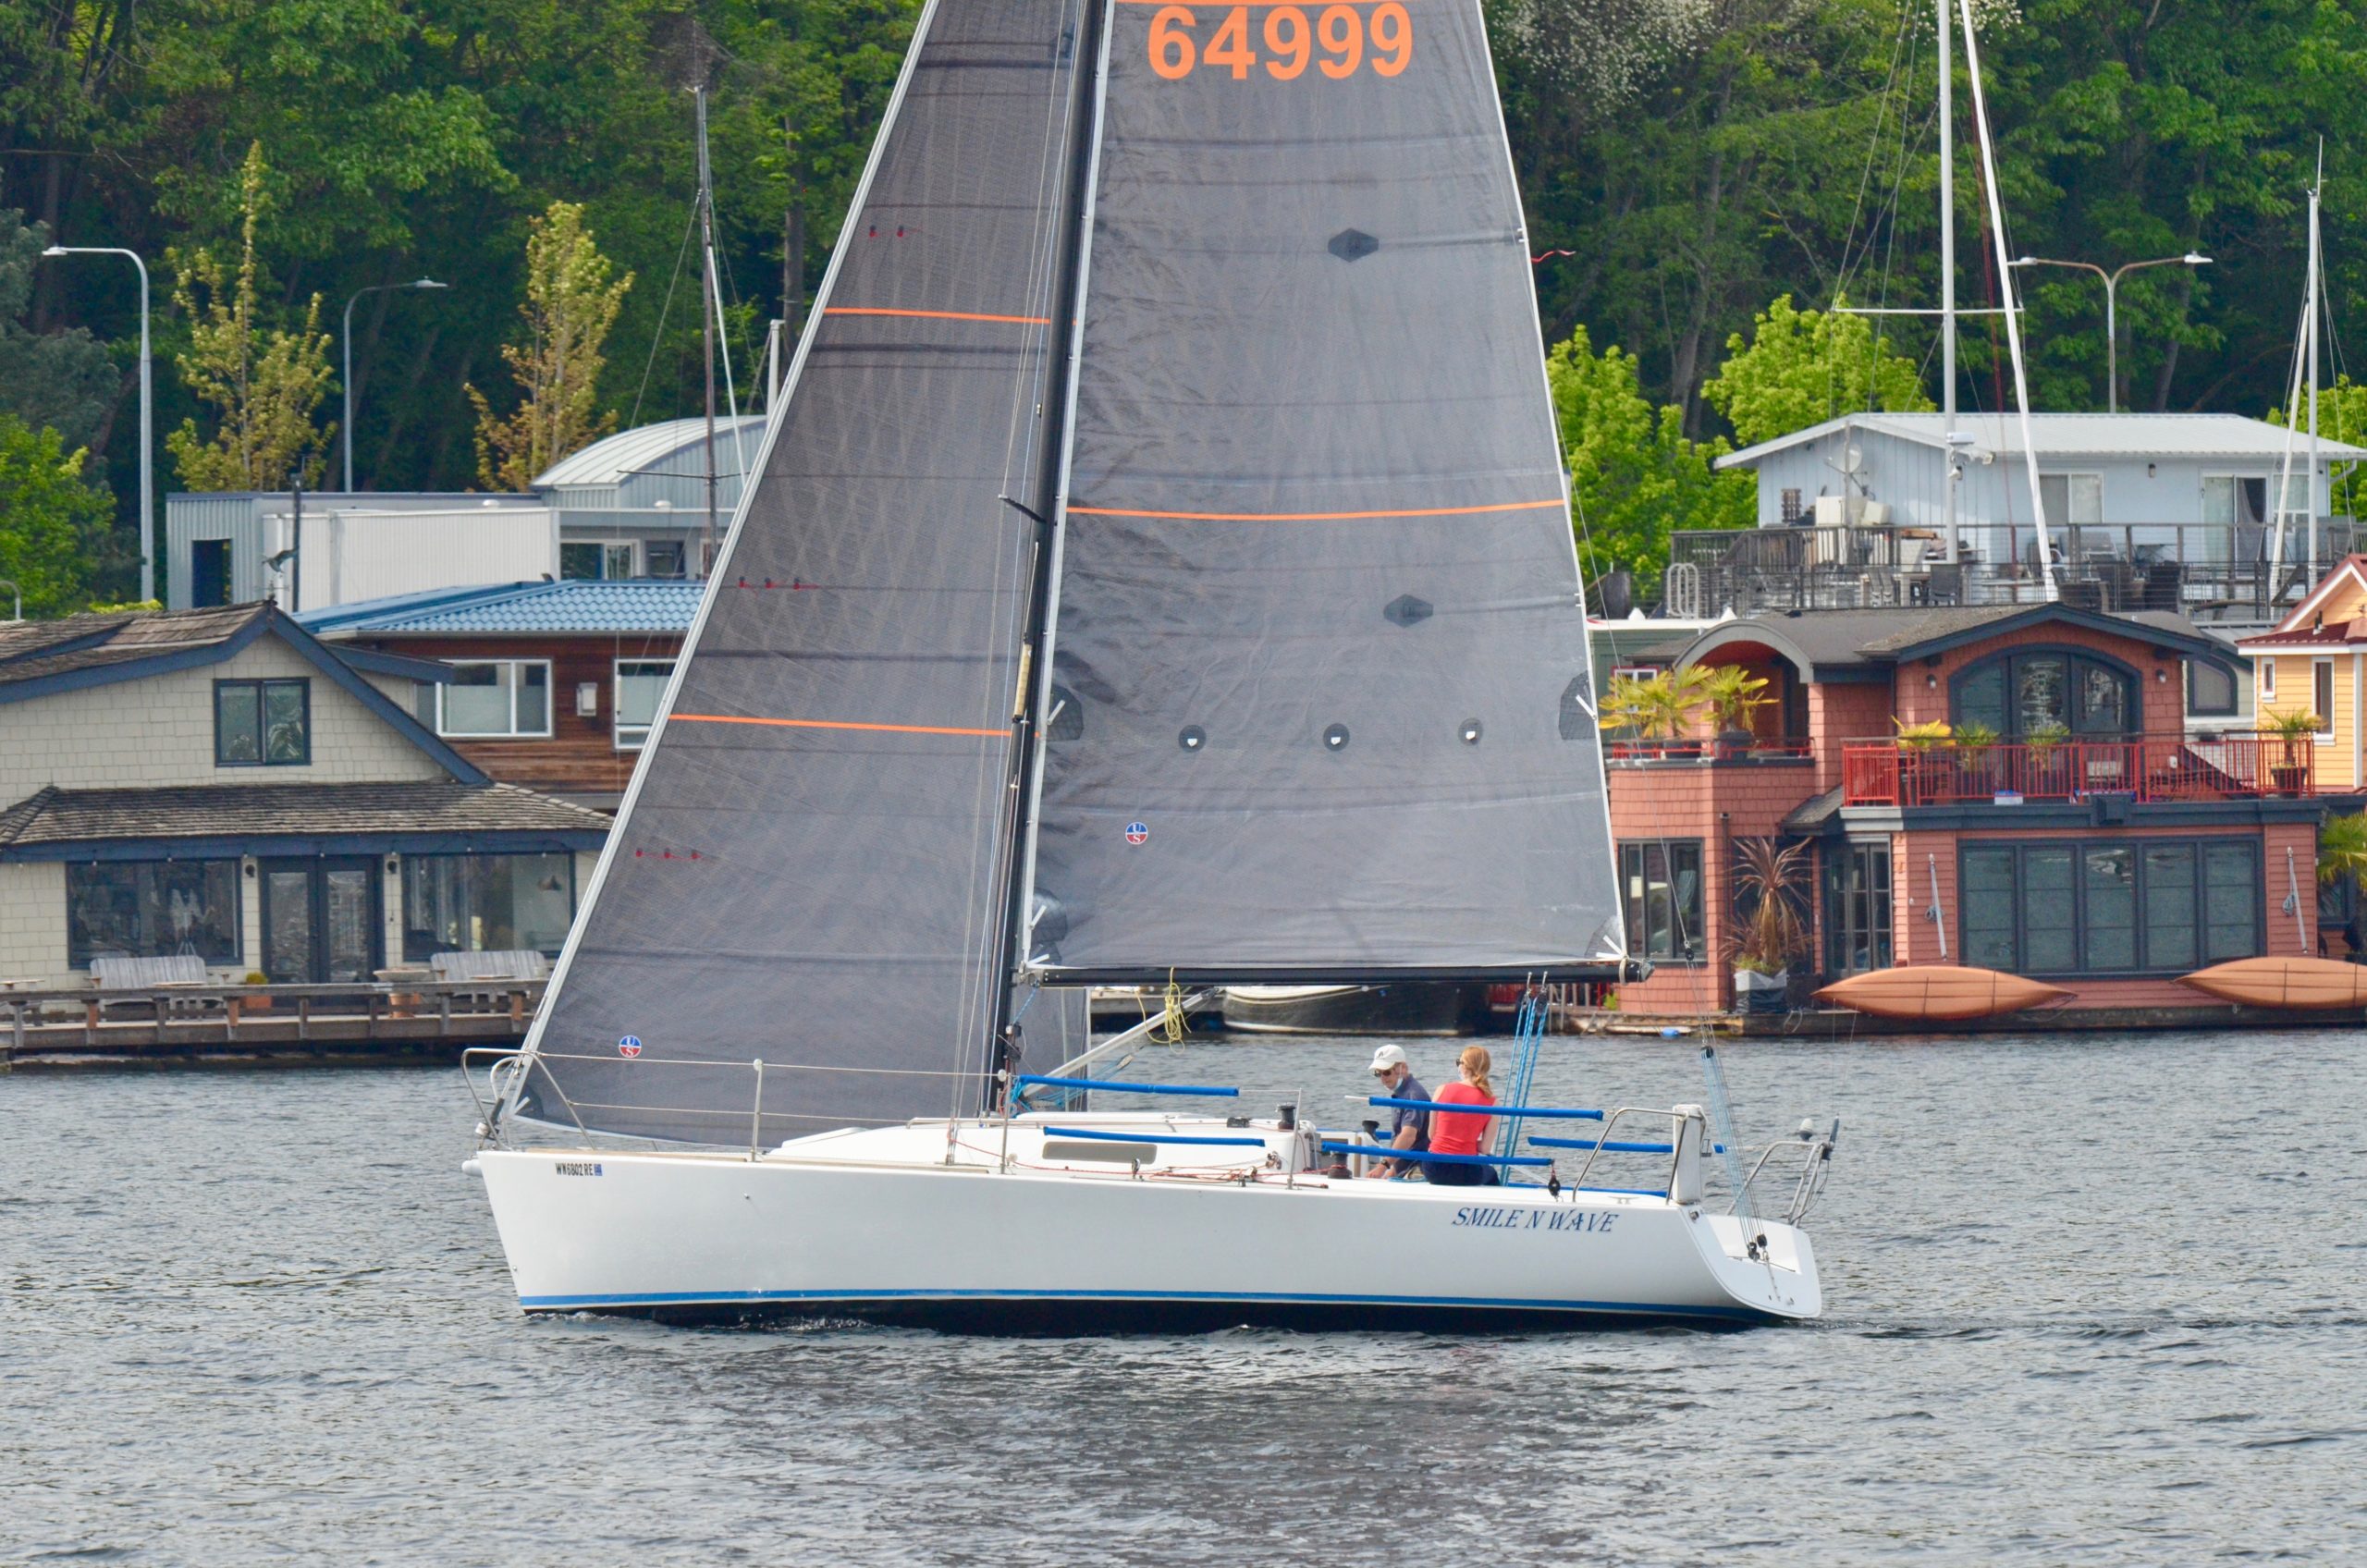 j 92 sailboat for sale